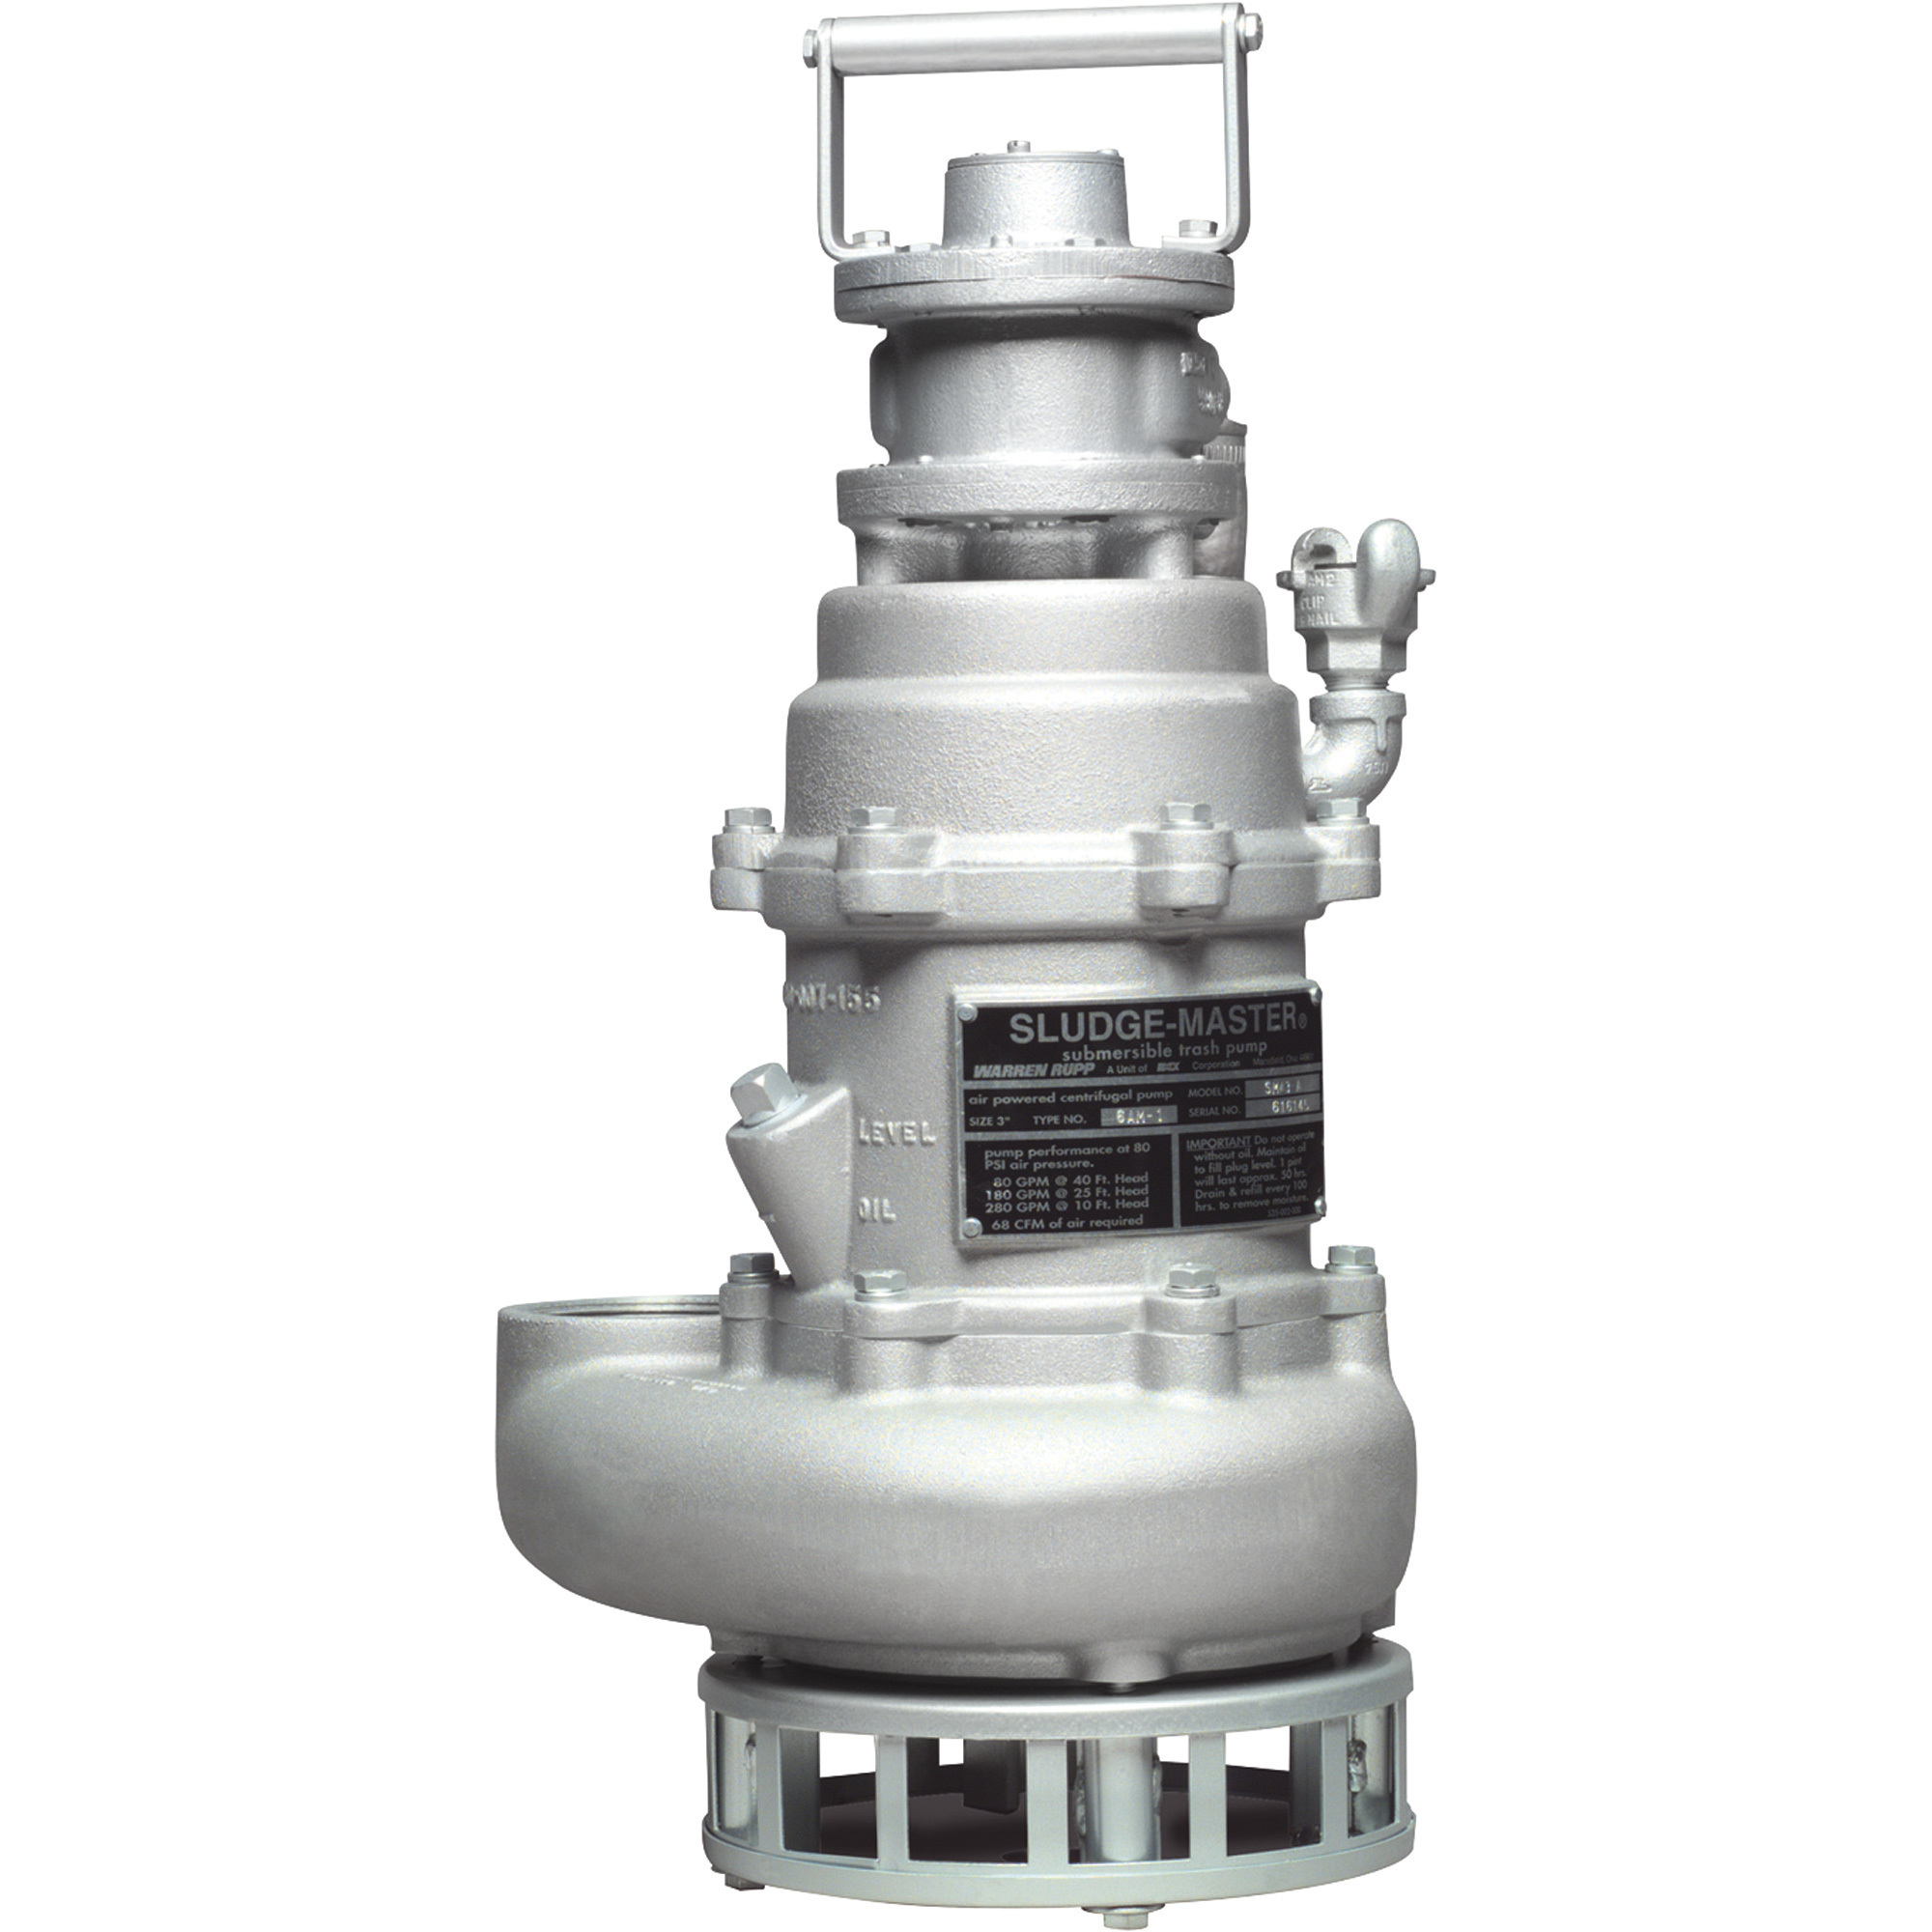 Sludge Master Air-Powered Self-Priming Submersible Trash Water Pump â 18,000 GPH, 2 1/2 HP, 3Inch Port, Model SMA3-A, 6AM1